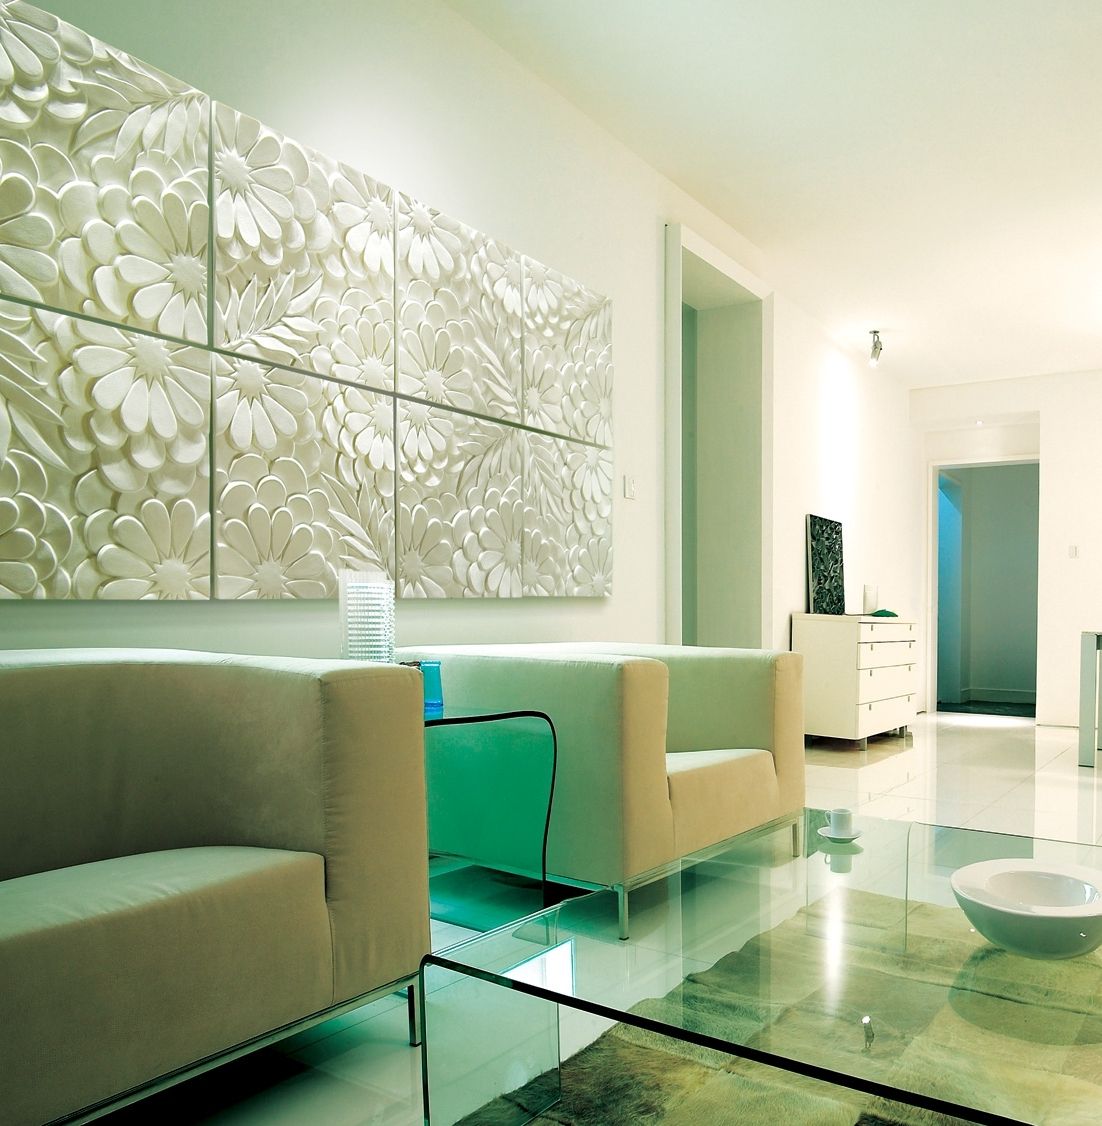 Contemporary 3d Wall Art Inside Well Liked Wall Art Ideas Design : Living Room 3d Wall Art Panels New (View 1 of 15)